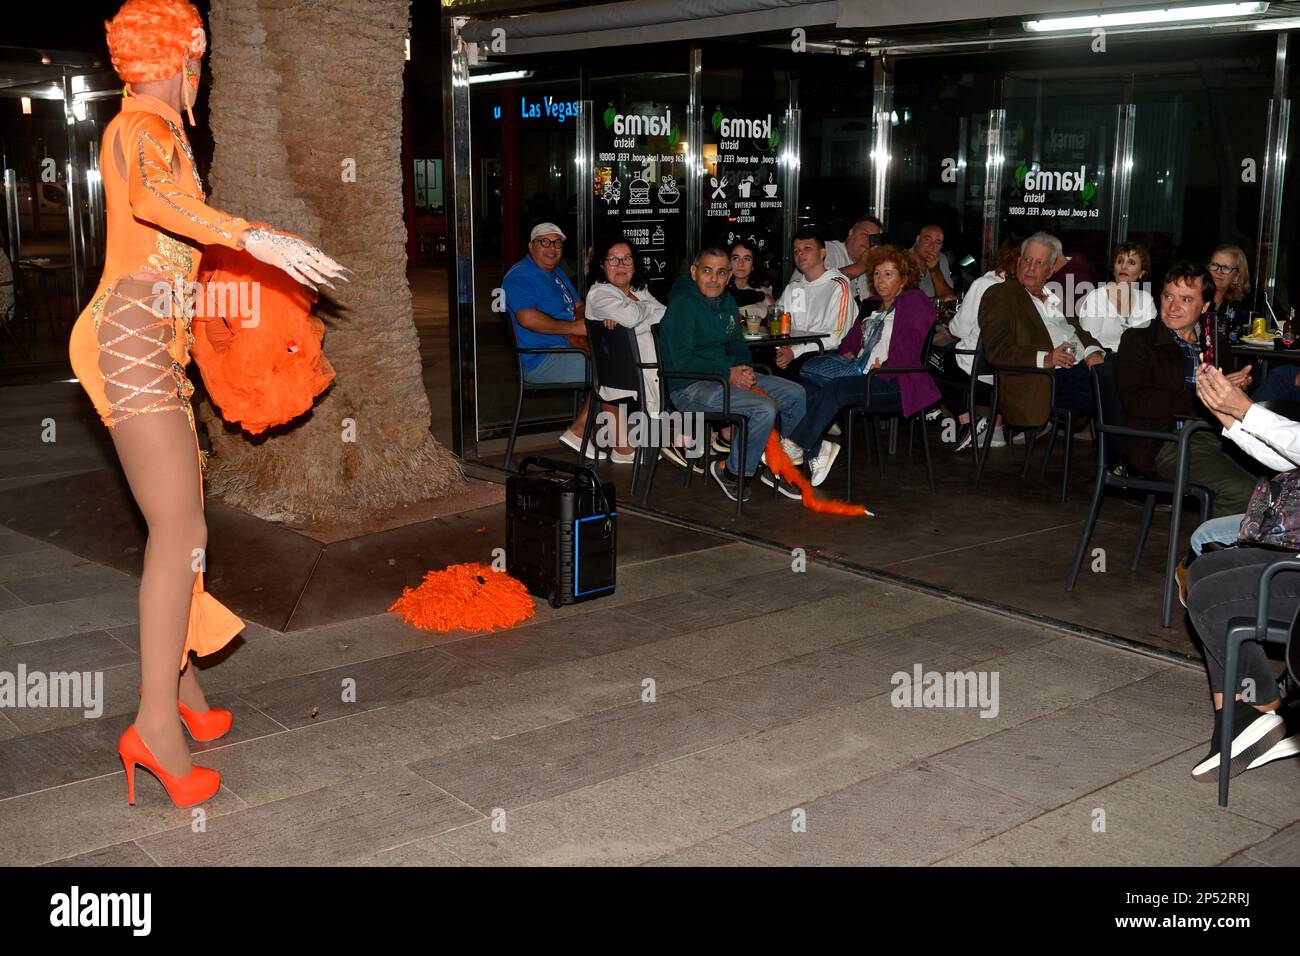 Artista drag, street busker en burlesque noche en el bar exterior (Sala de Juego Las Vegas) en Arinaga, Gran Canaria Foto de stock